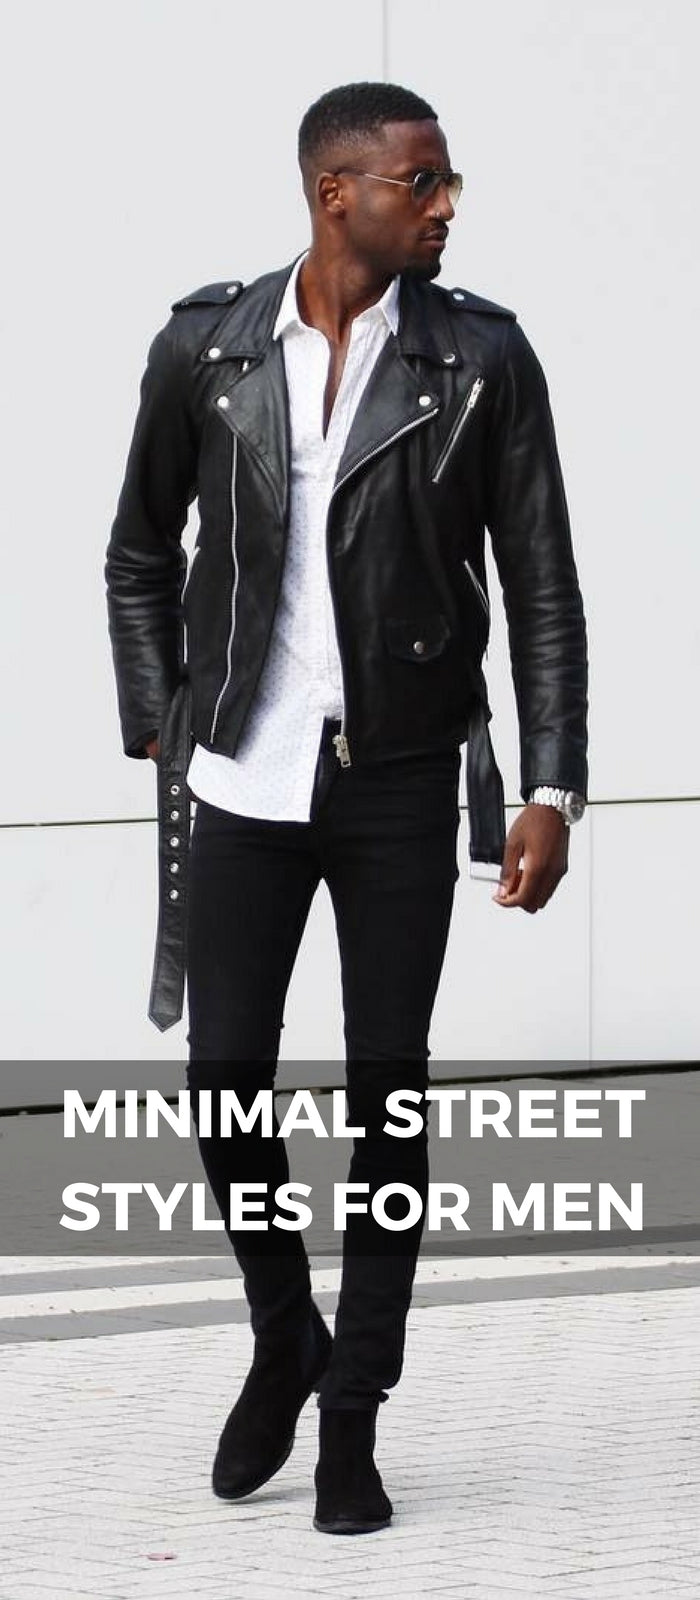 Minimal street style looks for men